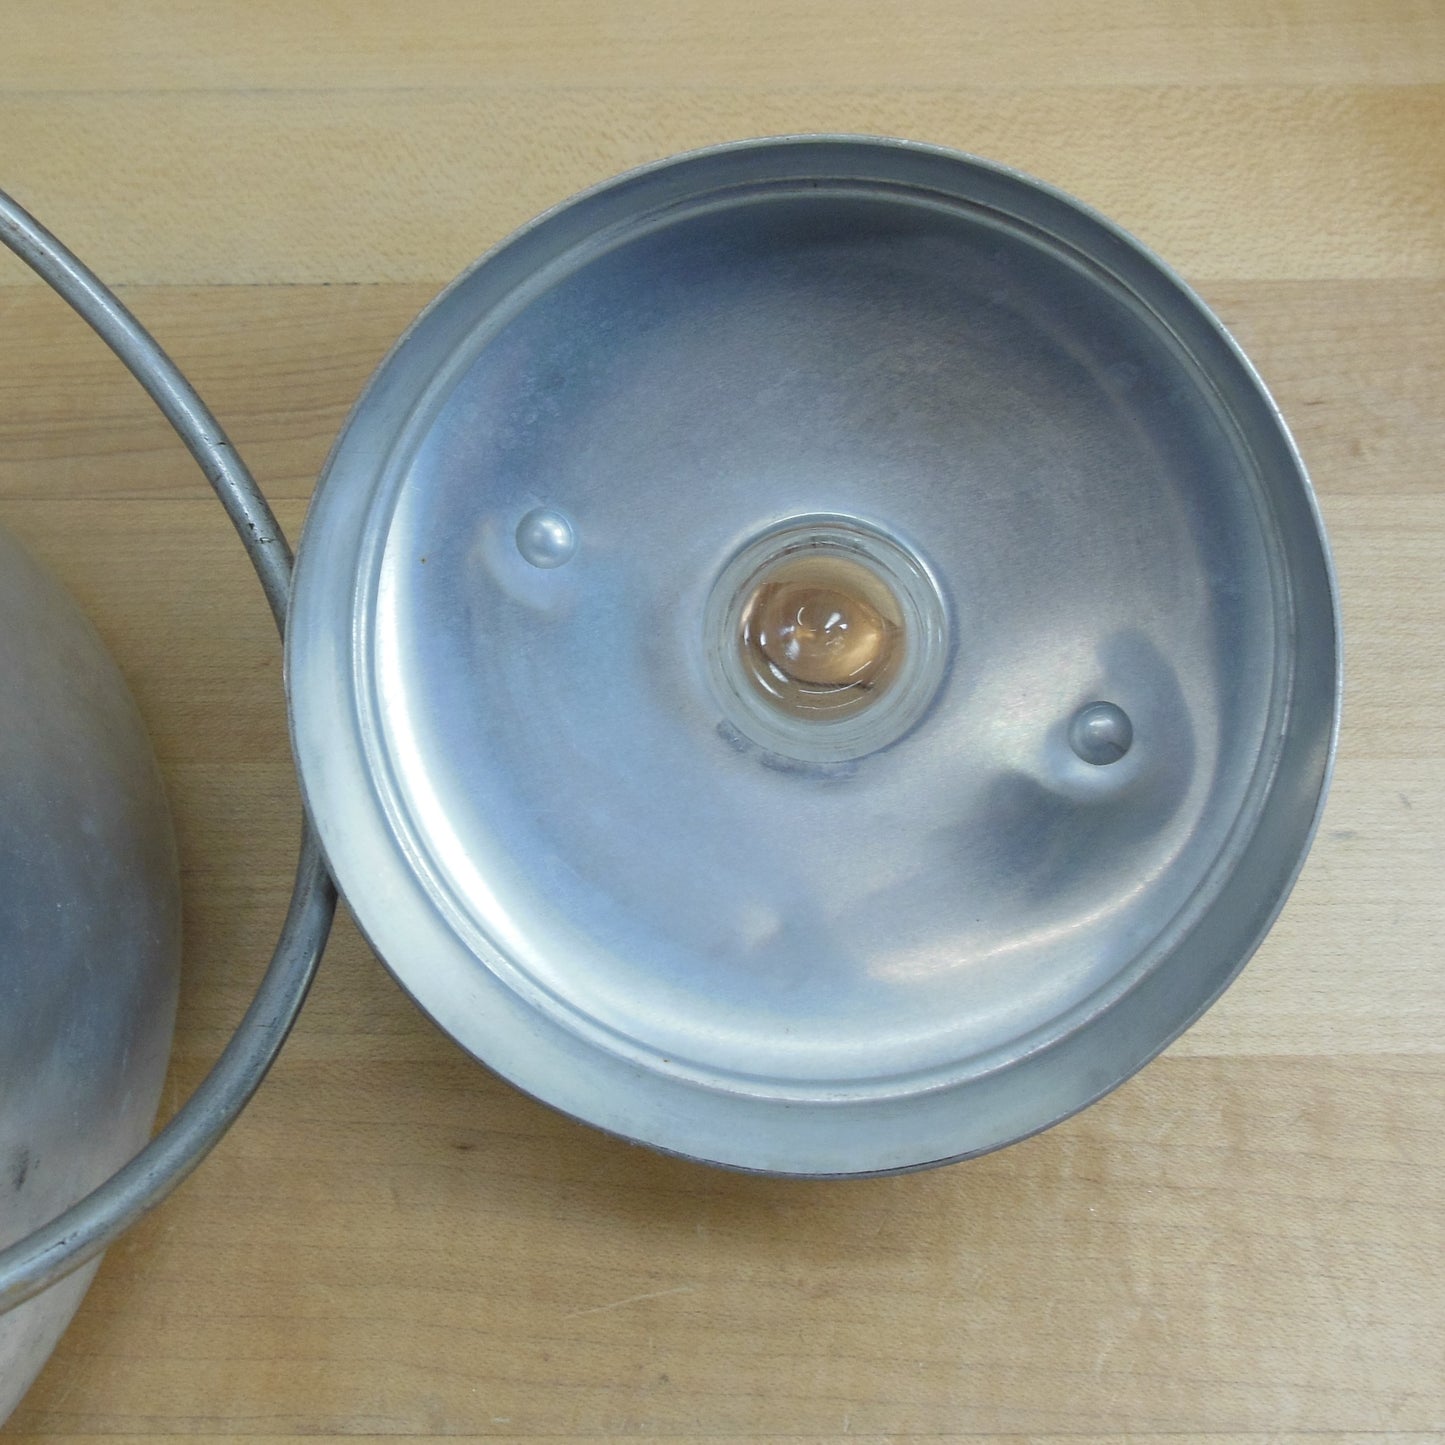 Wear Ever USA No. 3112 Aluminum Coffee Percolator Pot - No Guts Inset Glass Knob